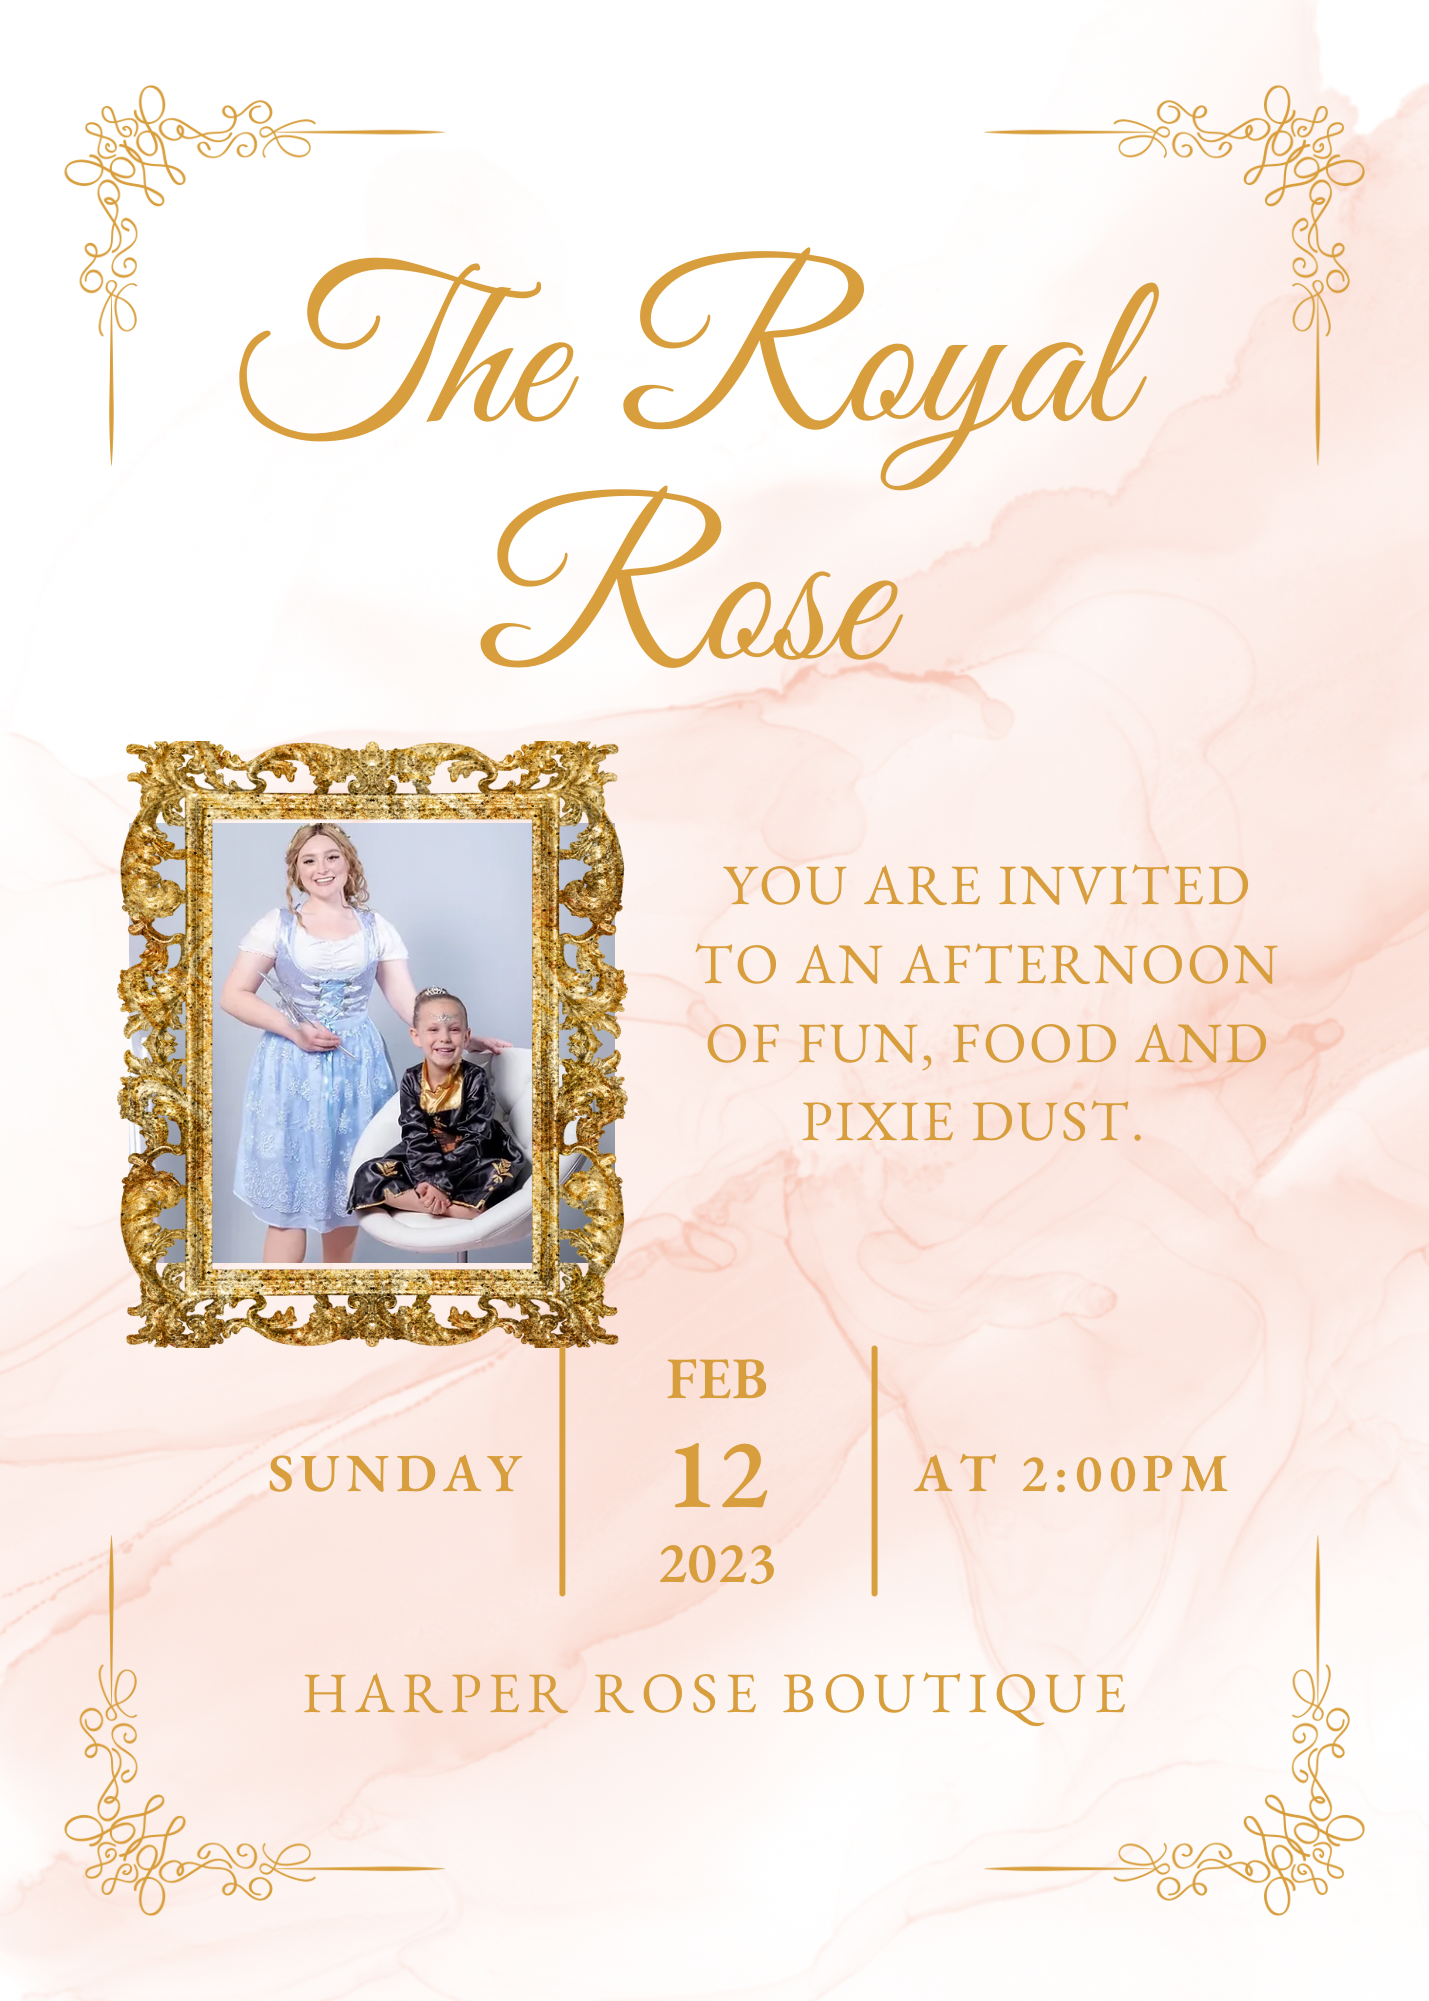 The Royal Rose Celebration